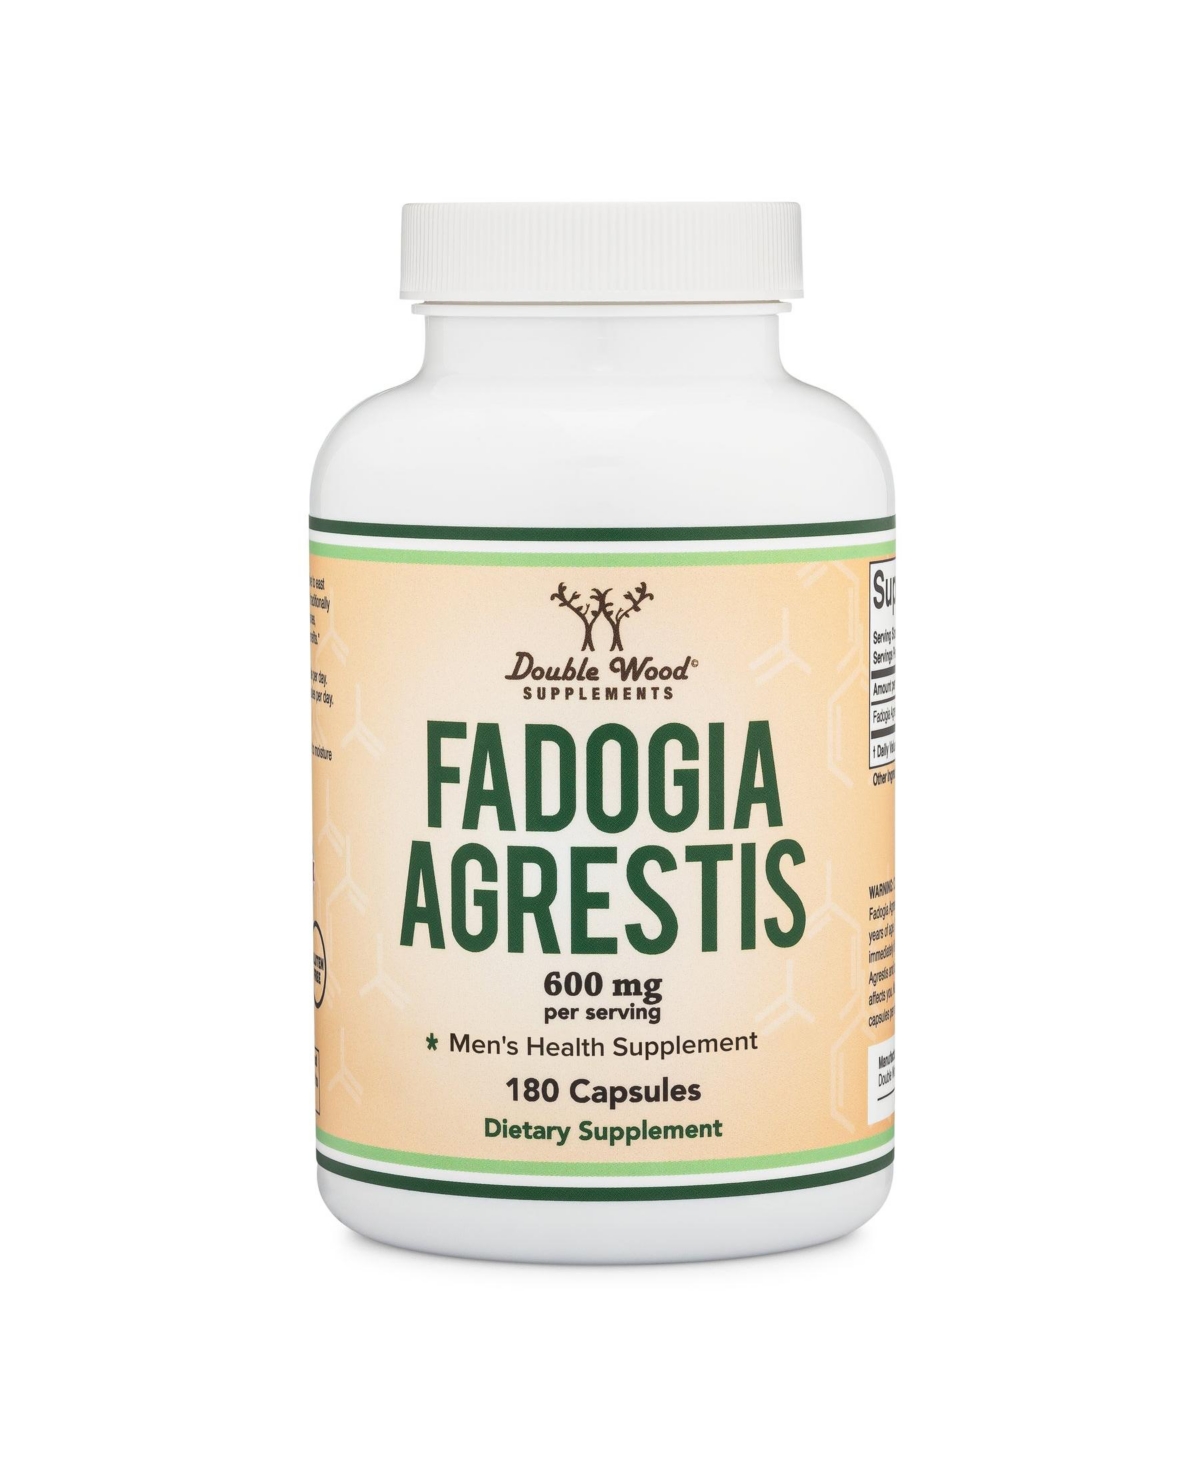 Fadogia Agrestis - 180 capsules, 600 mg servings